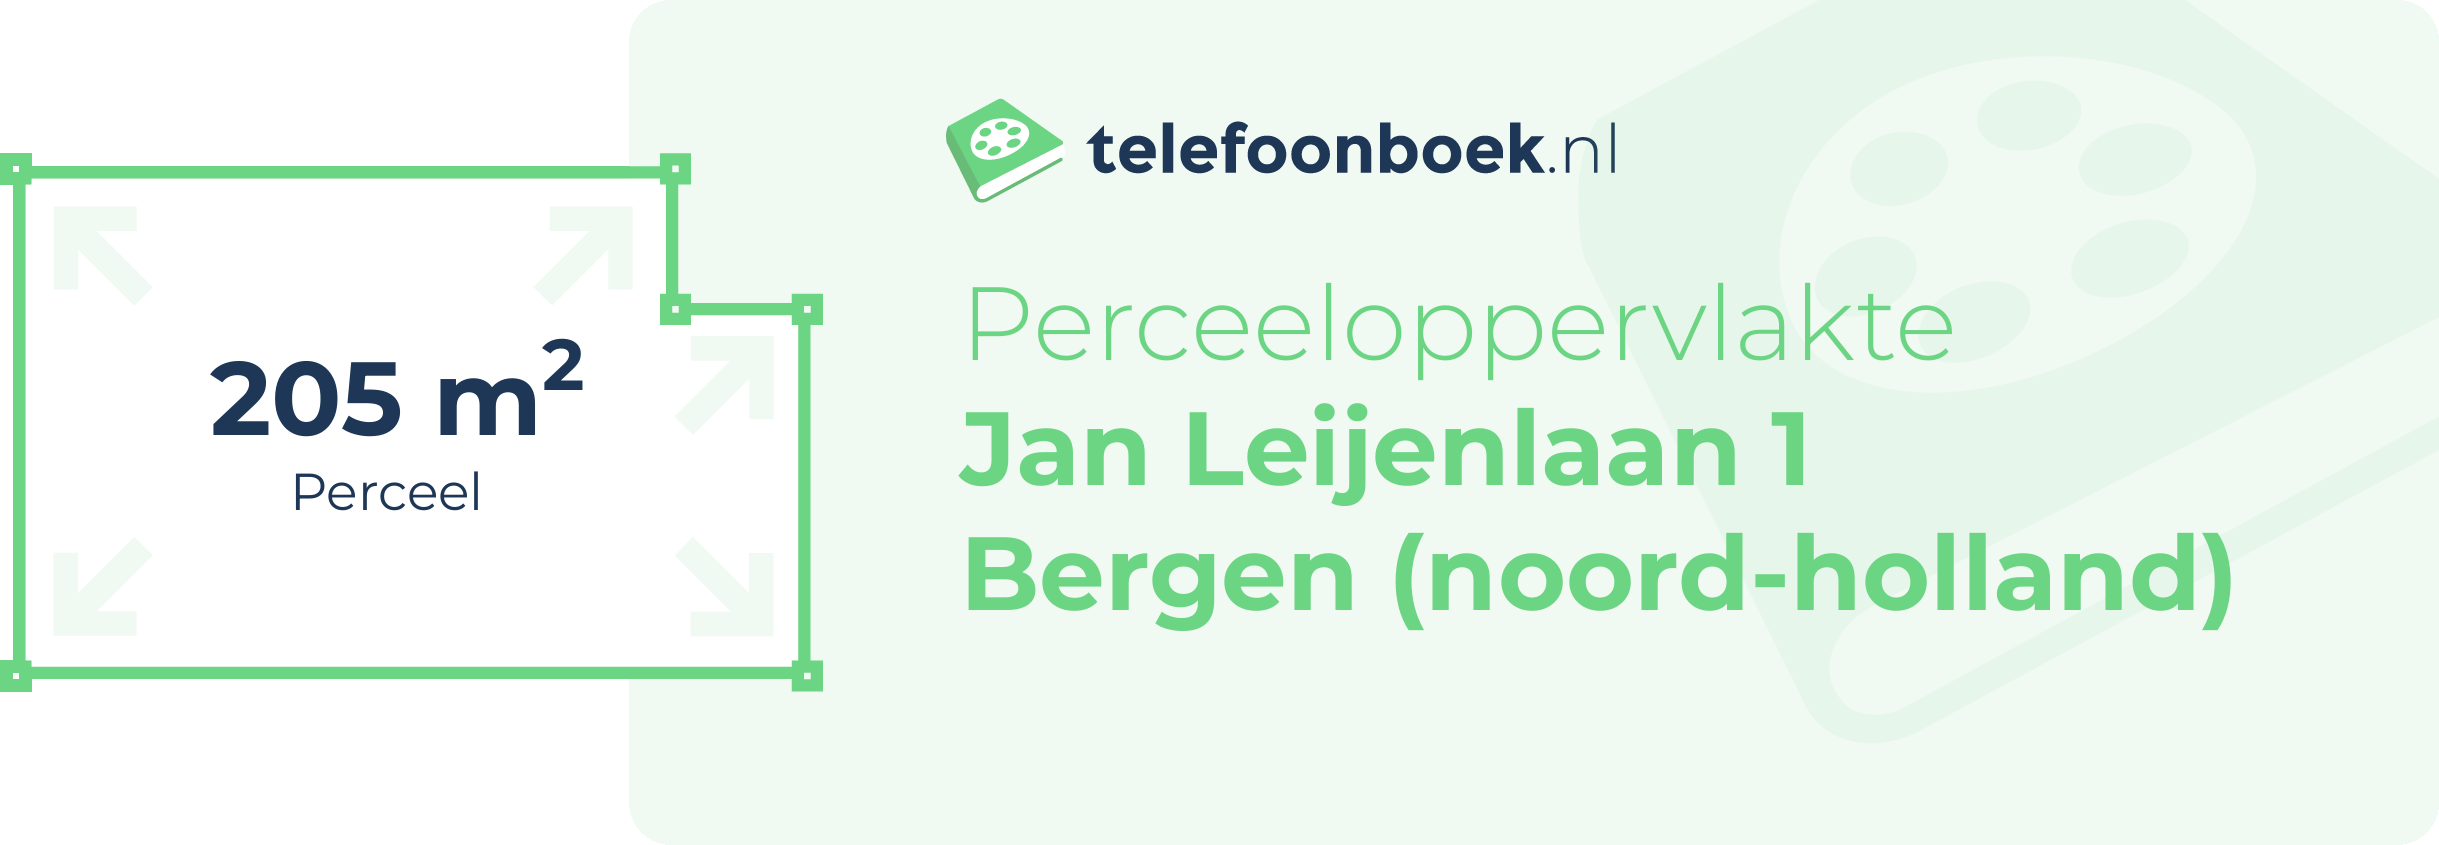 Perceeloppervlakte Jan Leijenlaan 1 Bergen (Noord-Holland)